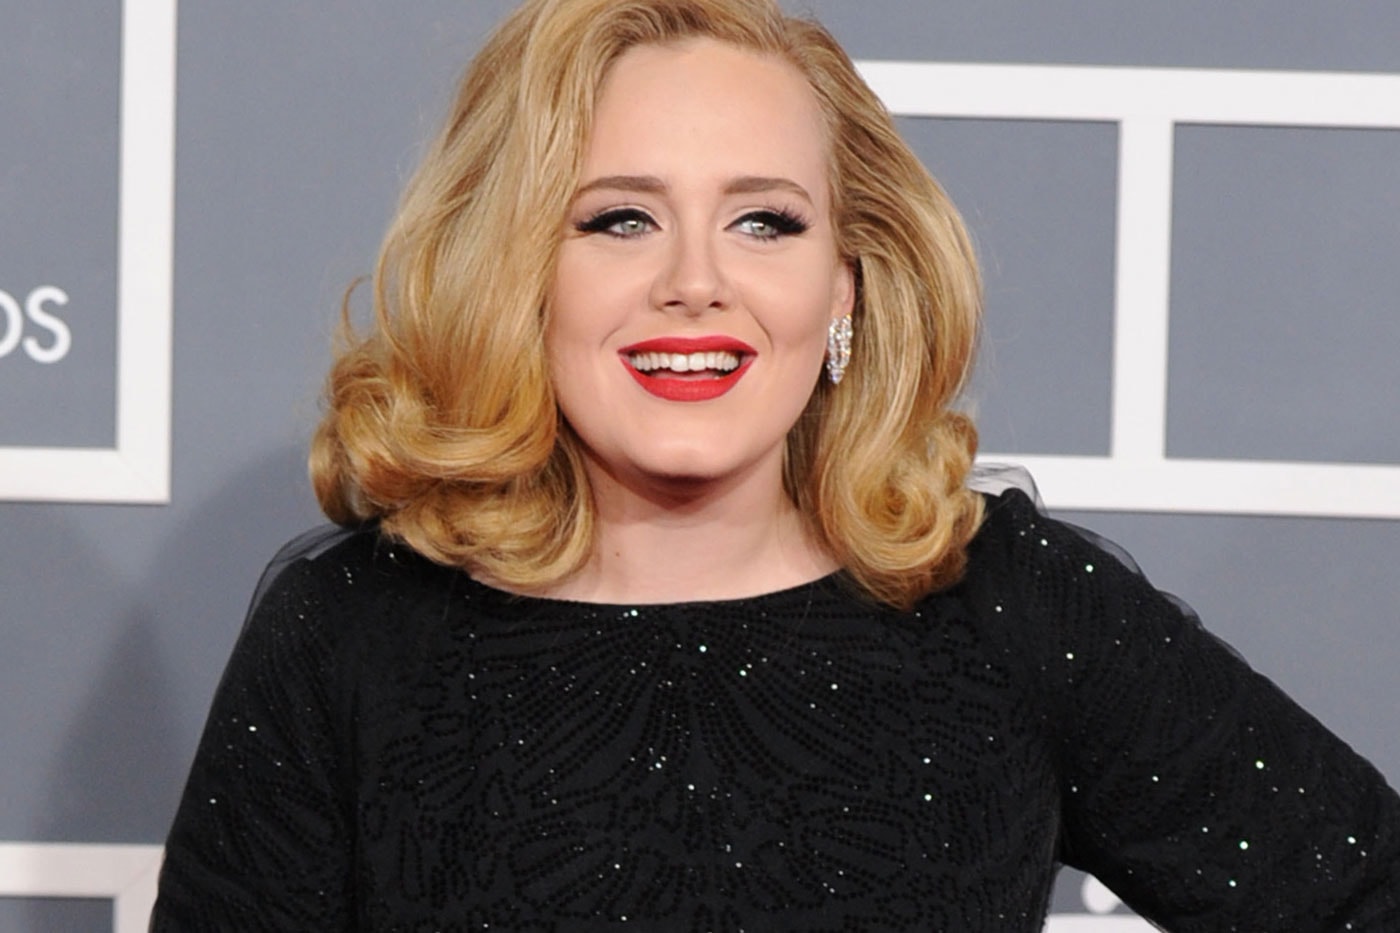 Adele's "Hello" Earns Strongest Video Debut of 2015